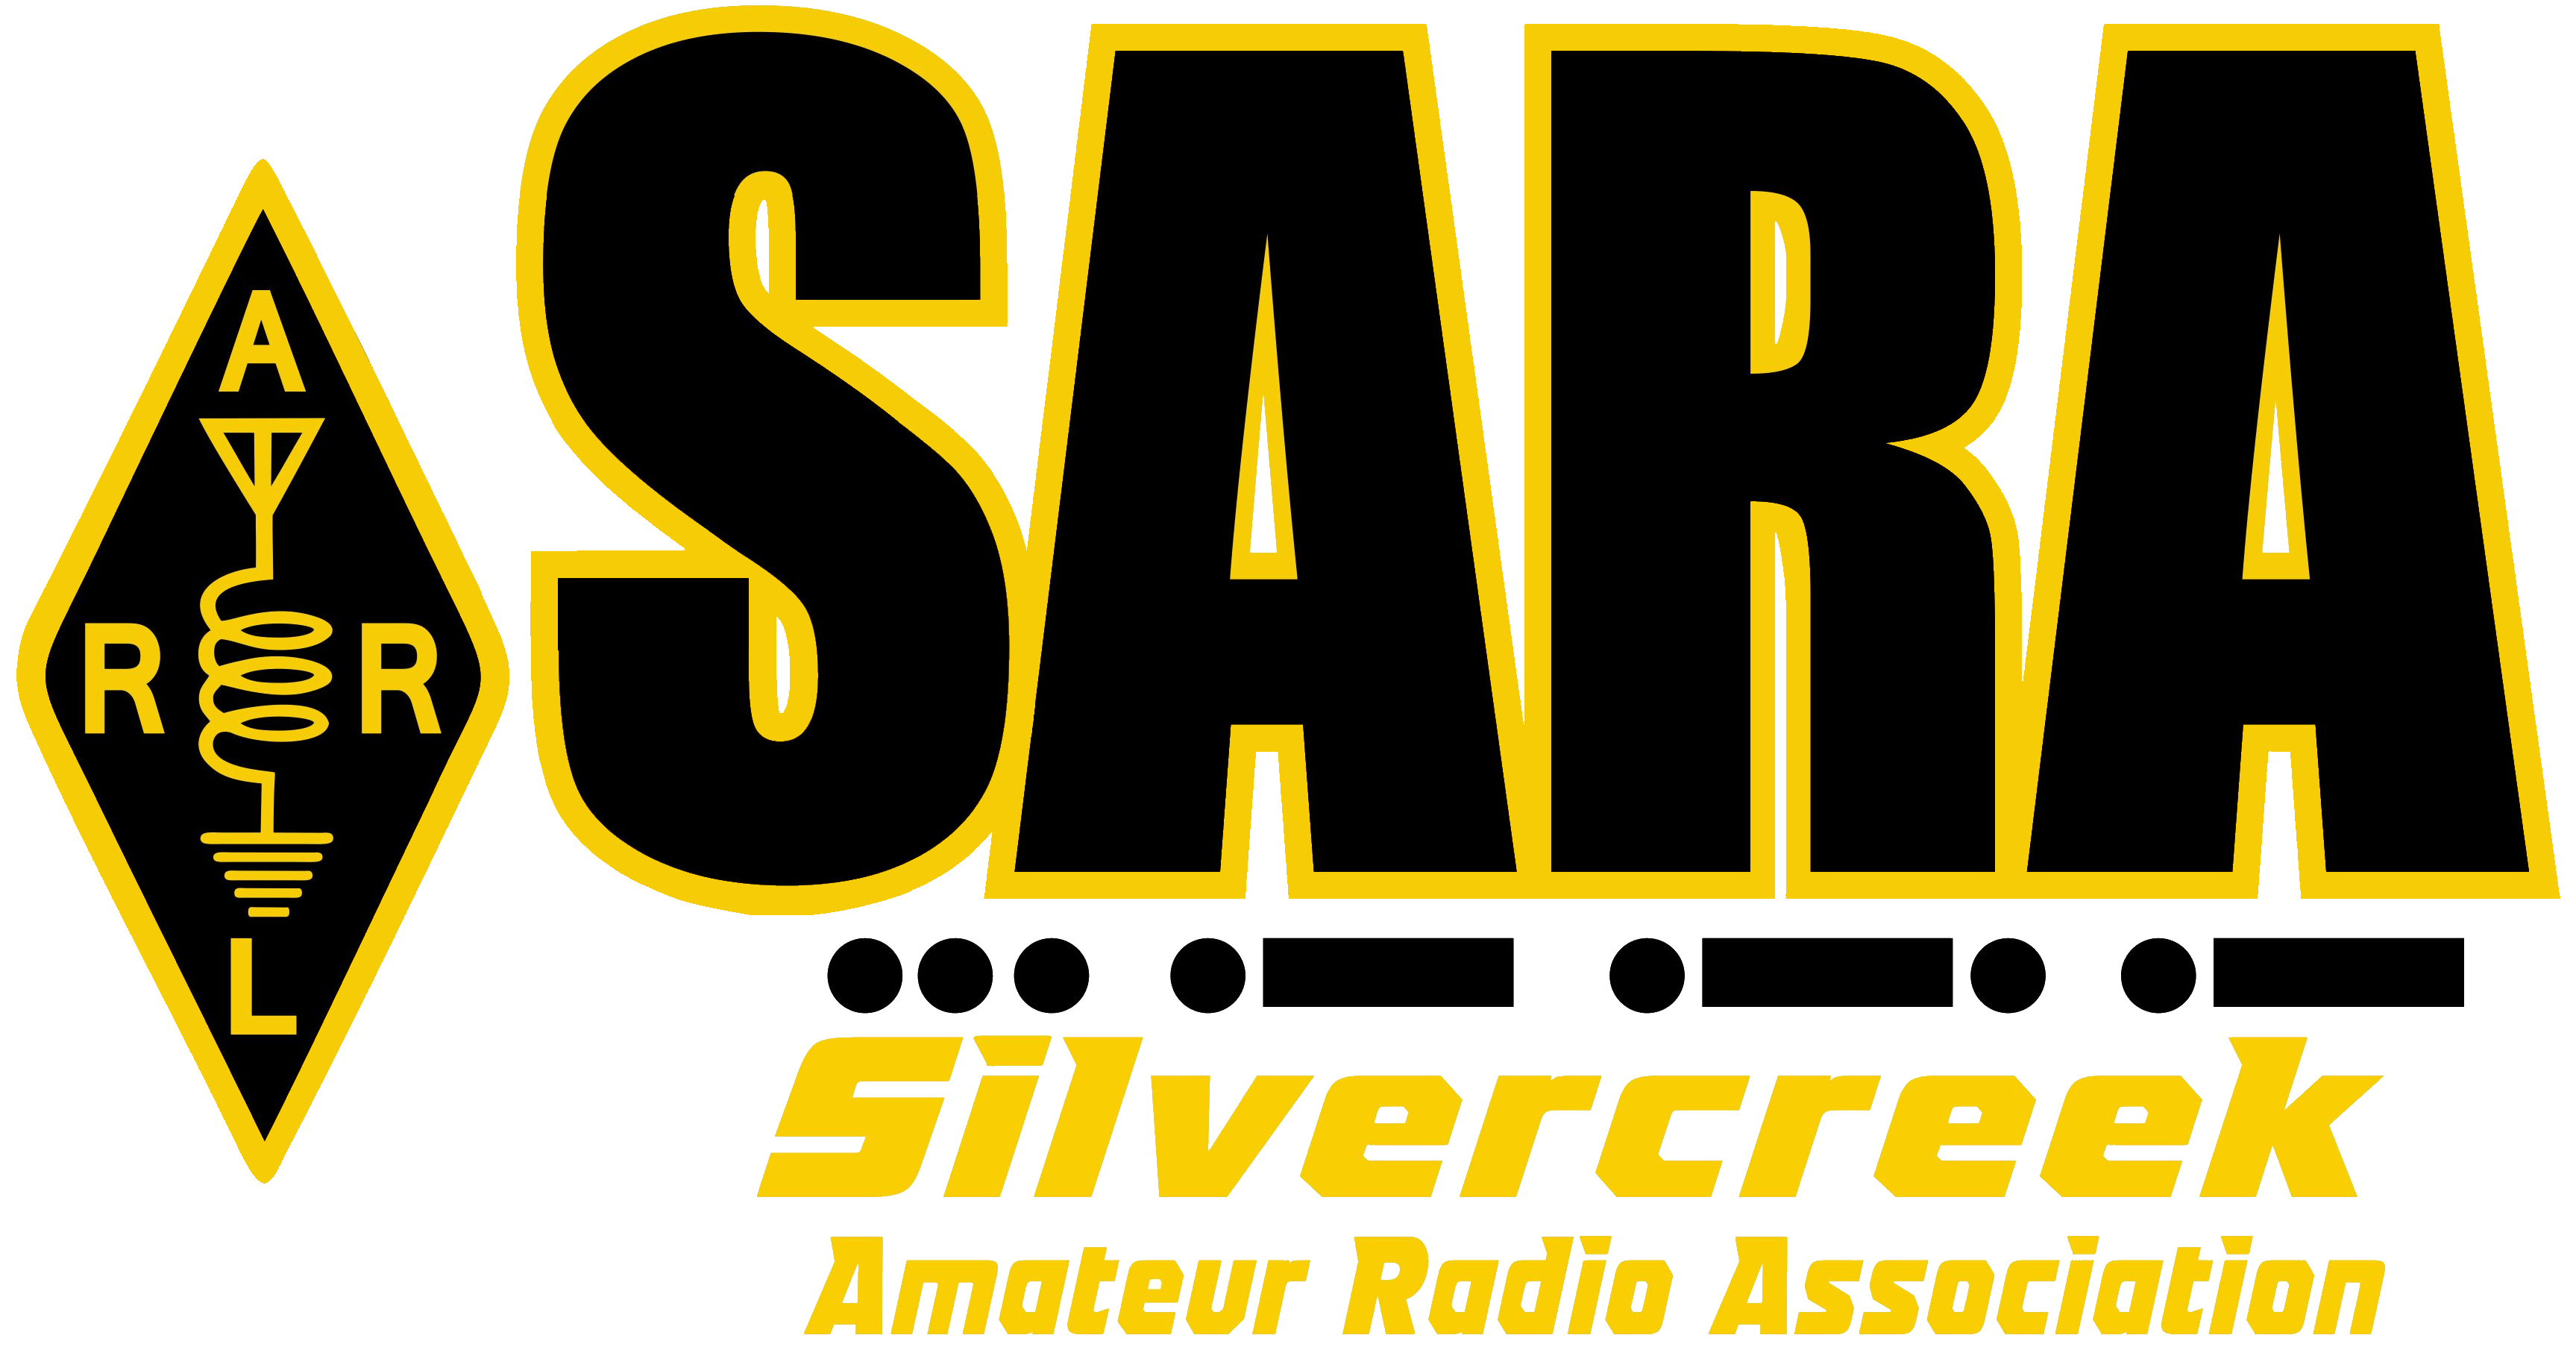 ARRL Logo - SARA Branding and Image